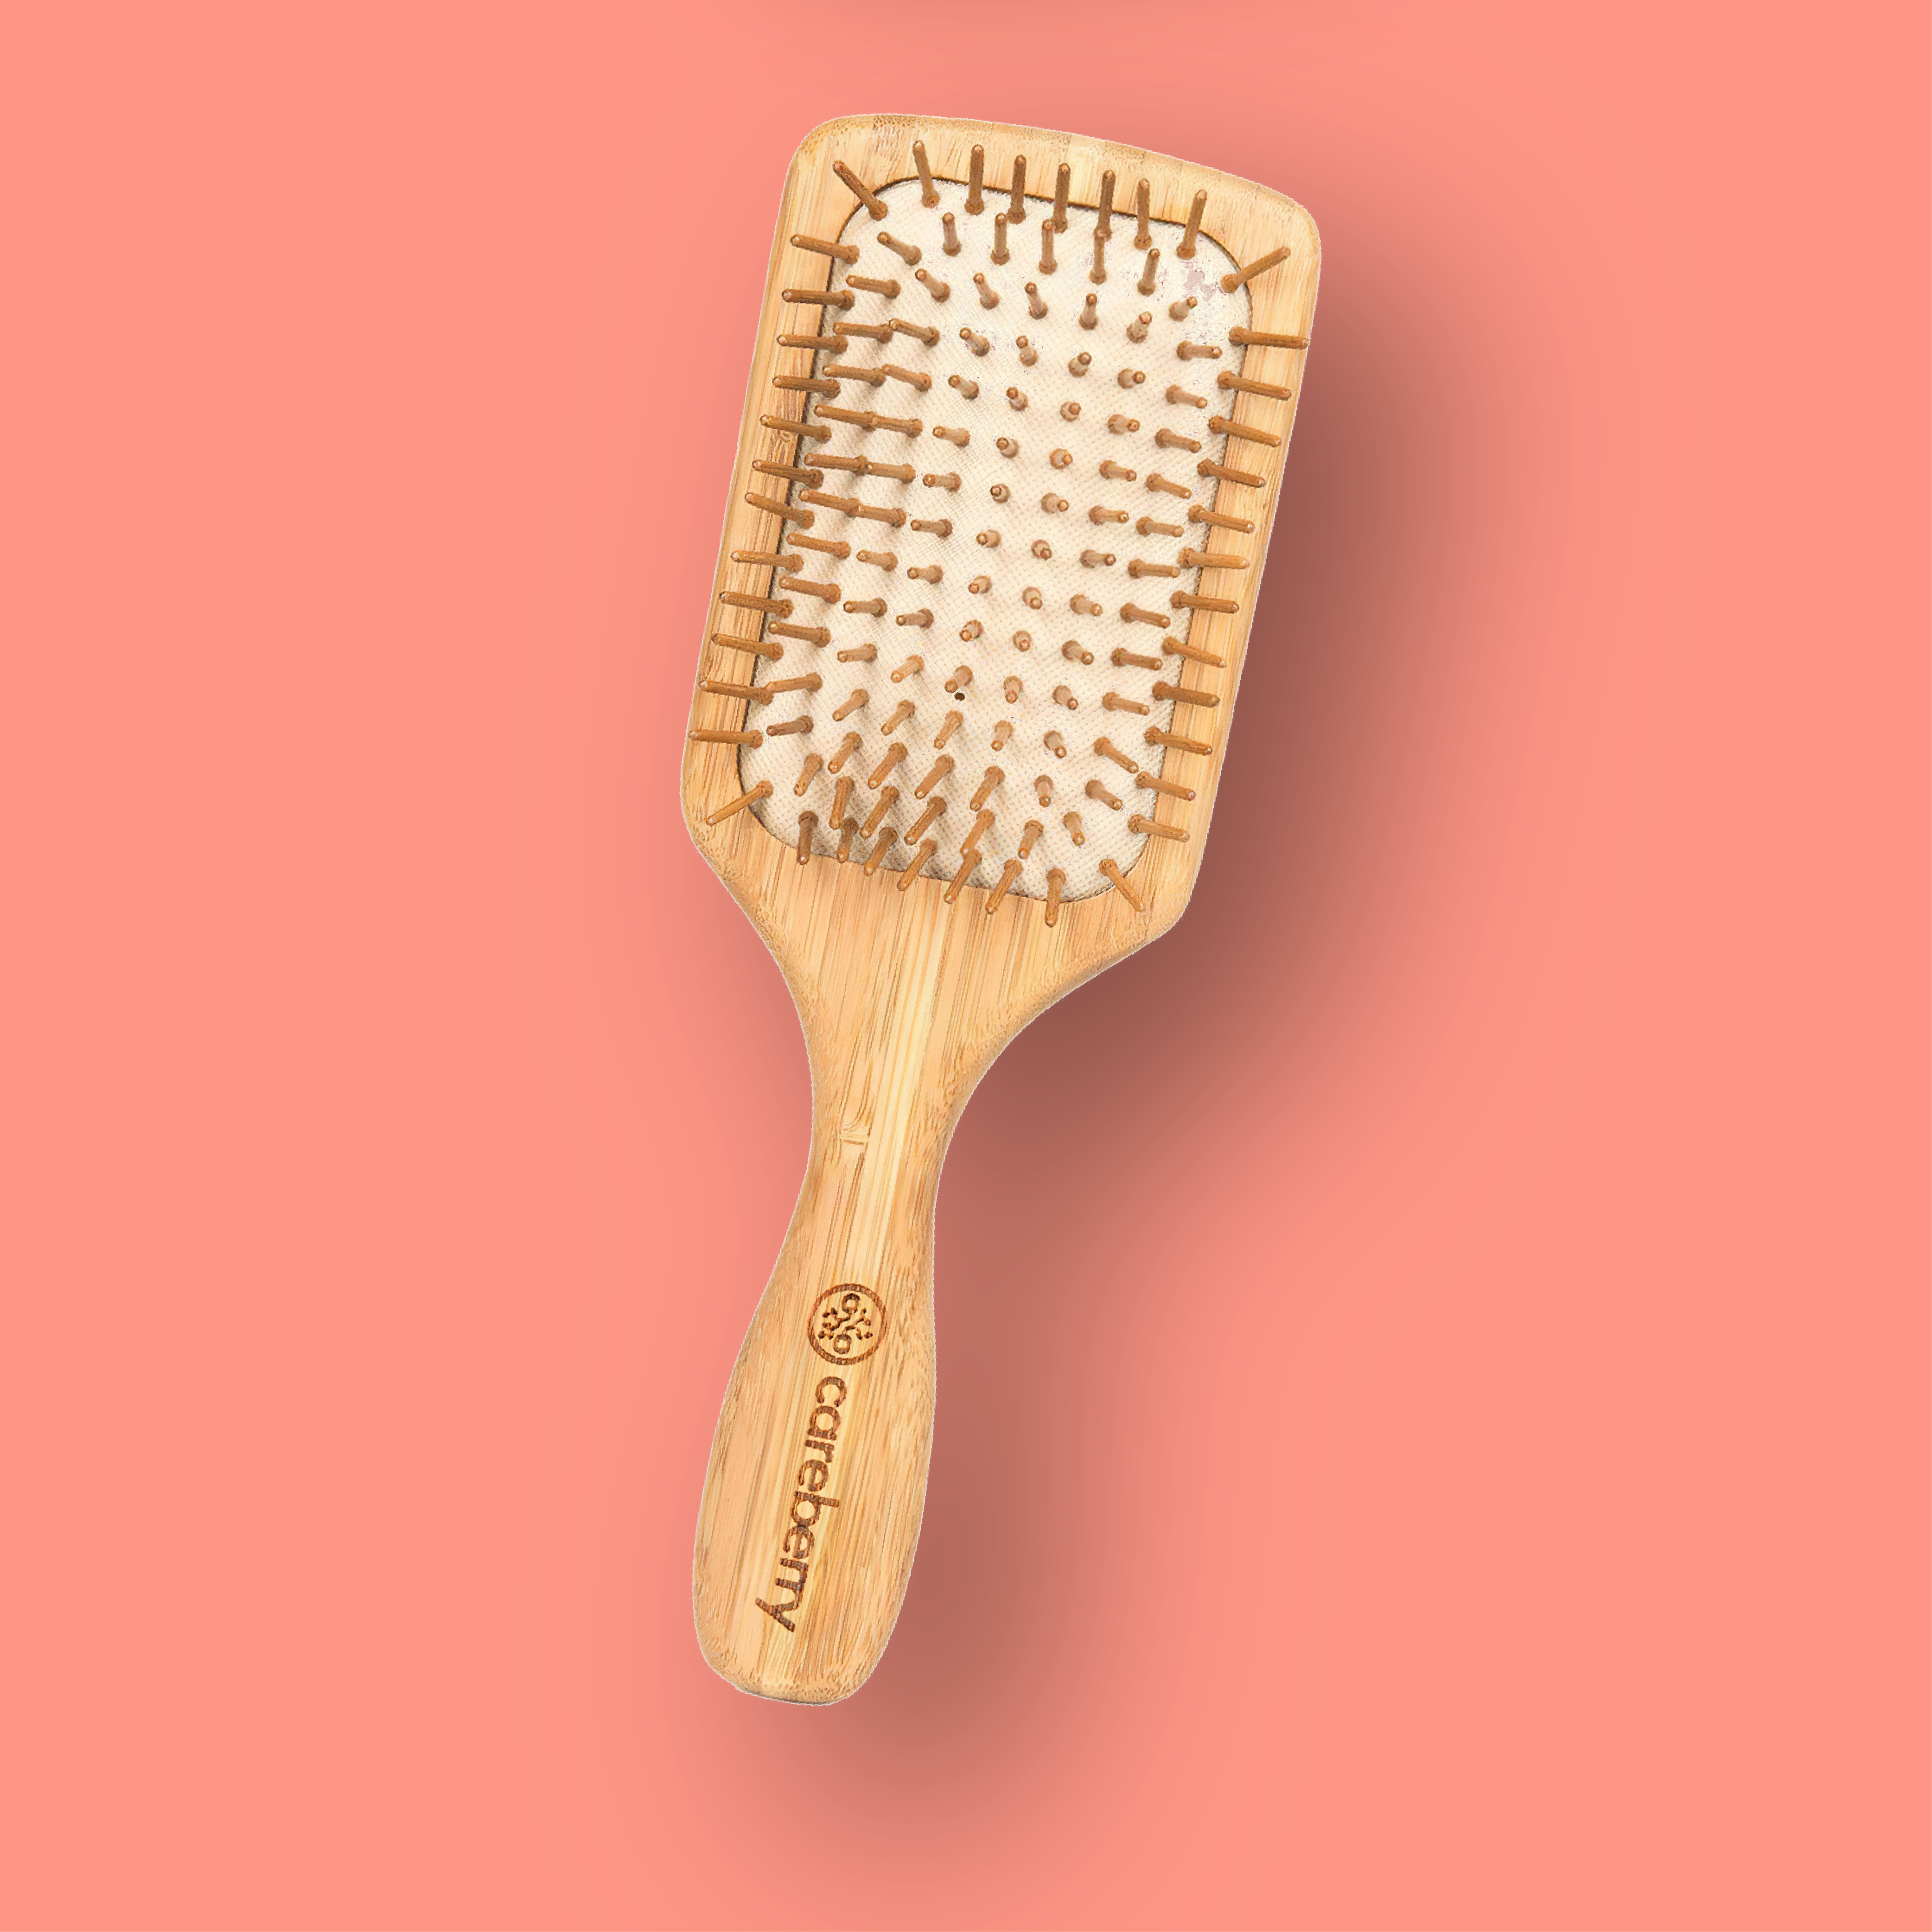 100% natural bamboo brush